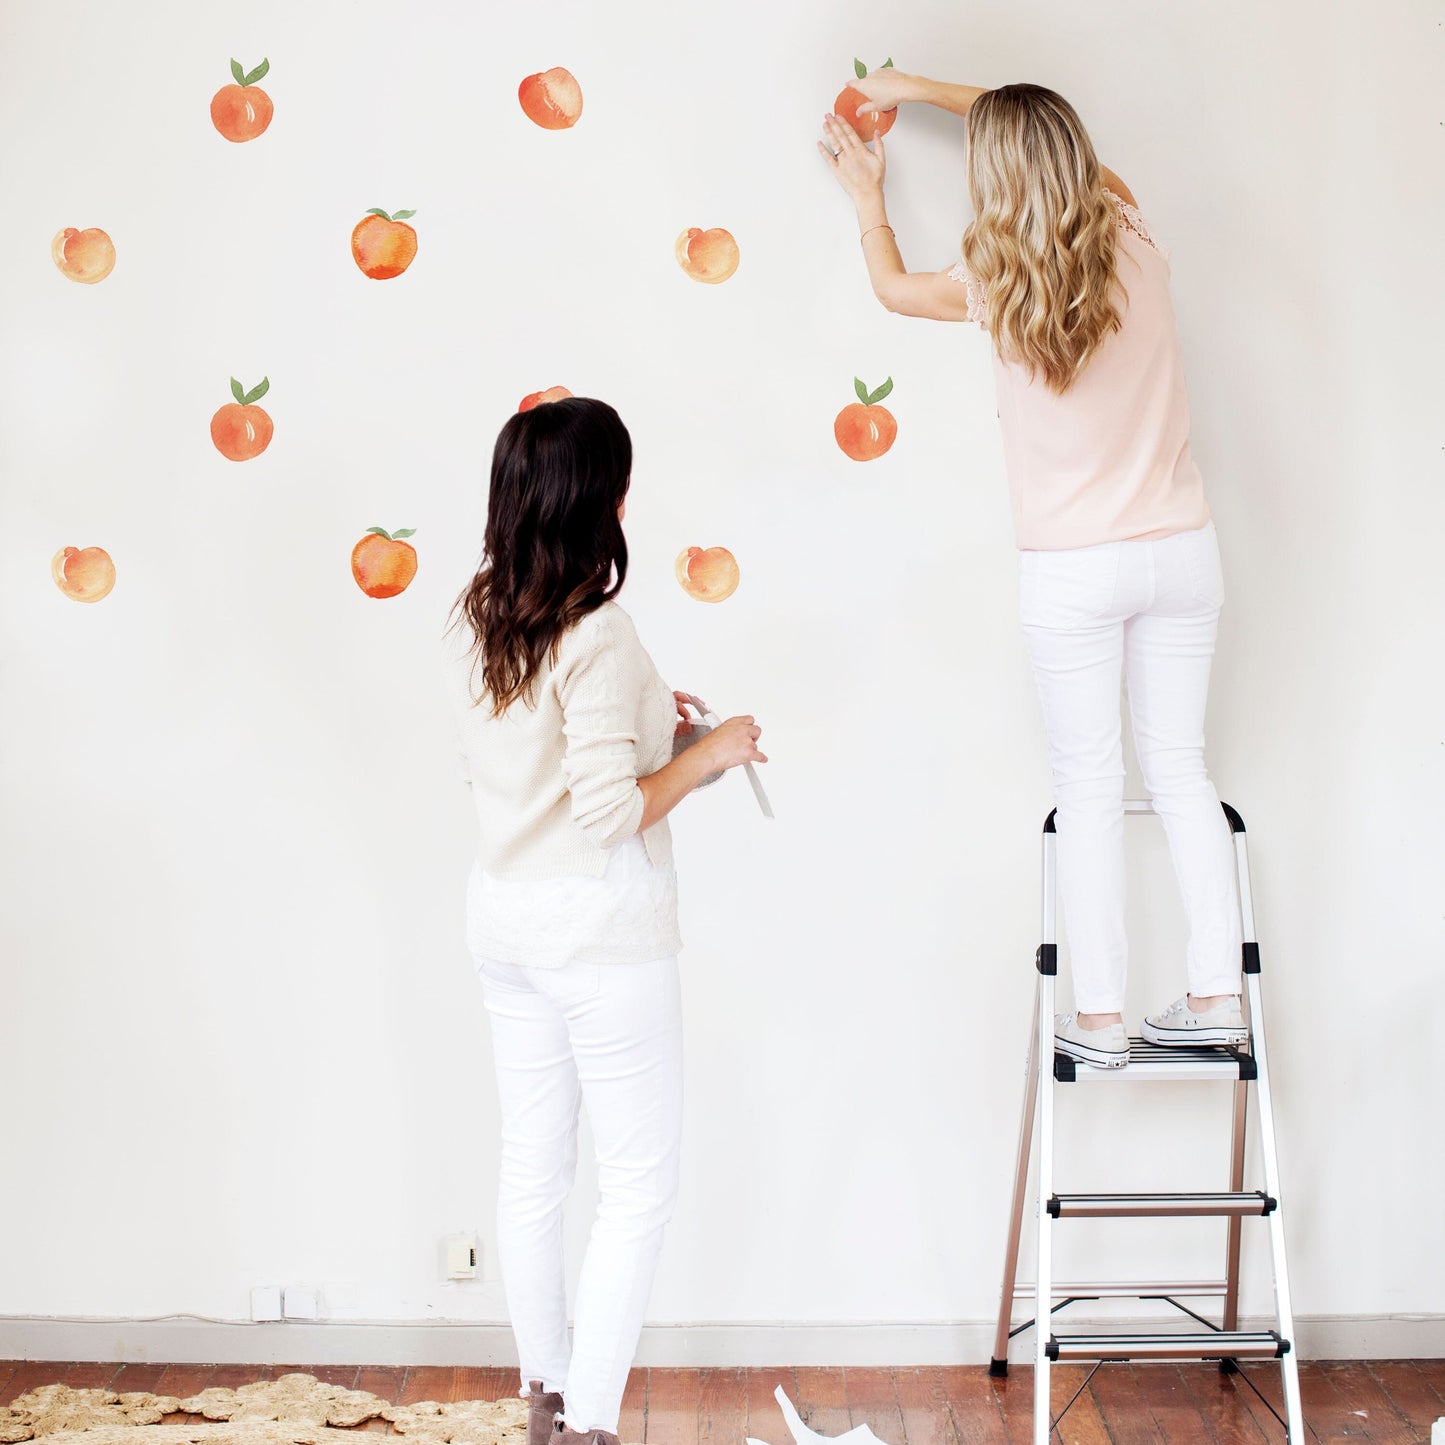 SALE - Mini Peach Wall Decals